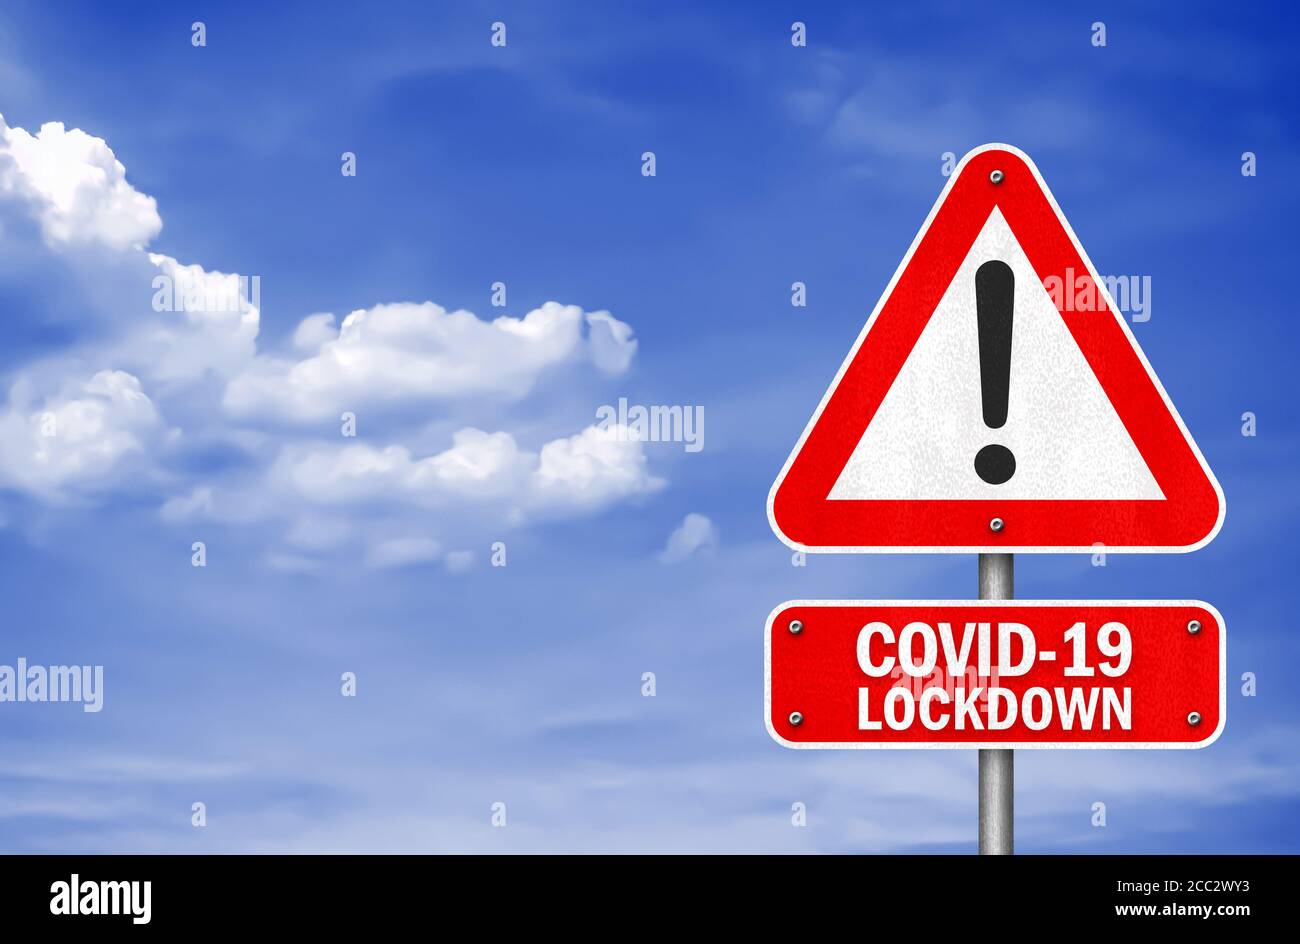 Covid-19 Lockdown - roadsign warning Stock Photo